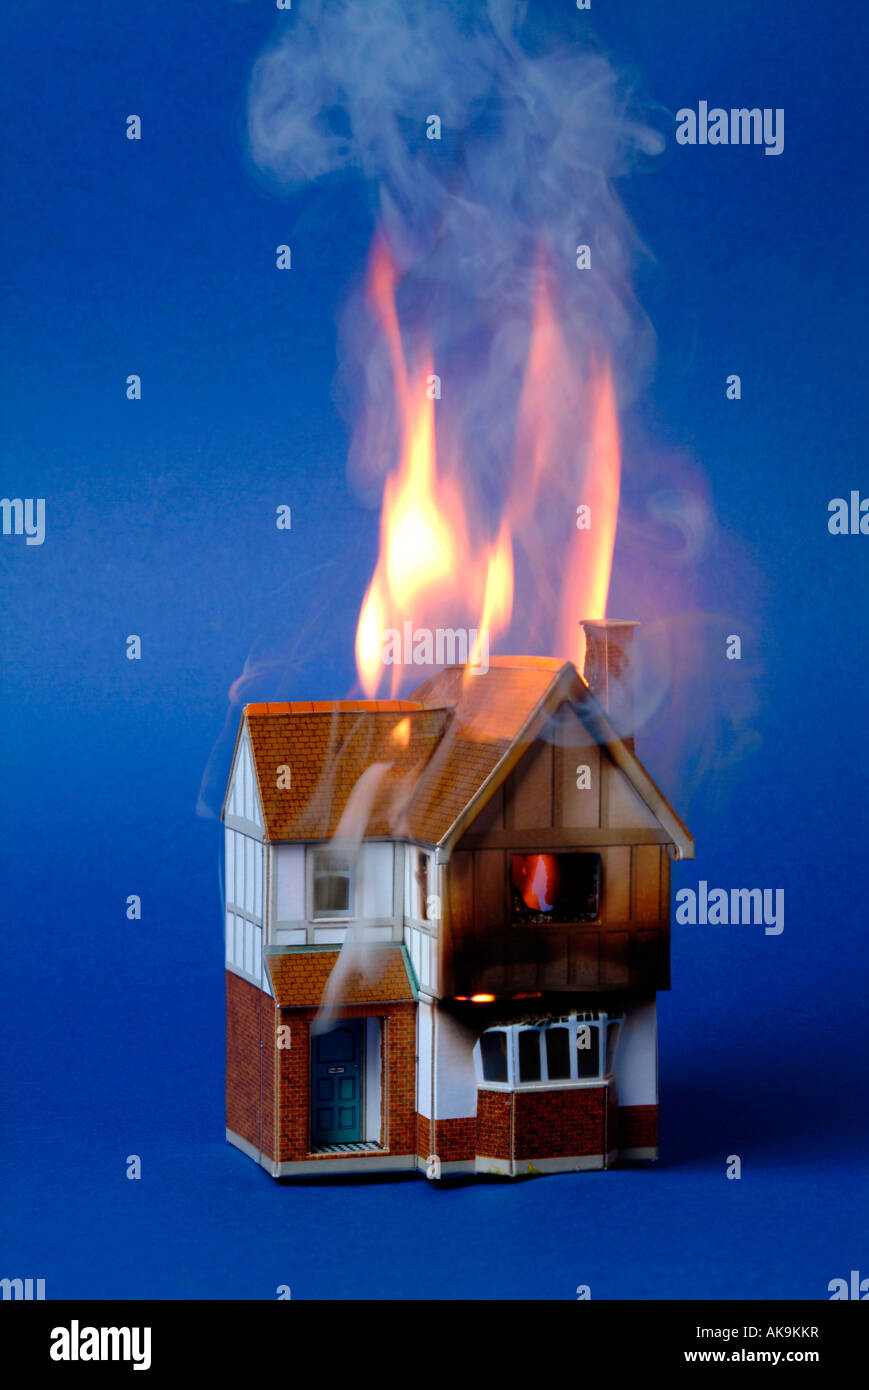 Karton-Haus in Brand Stockfoto